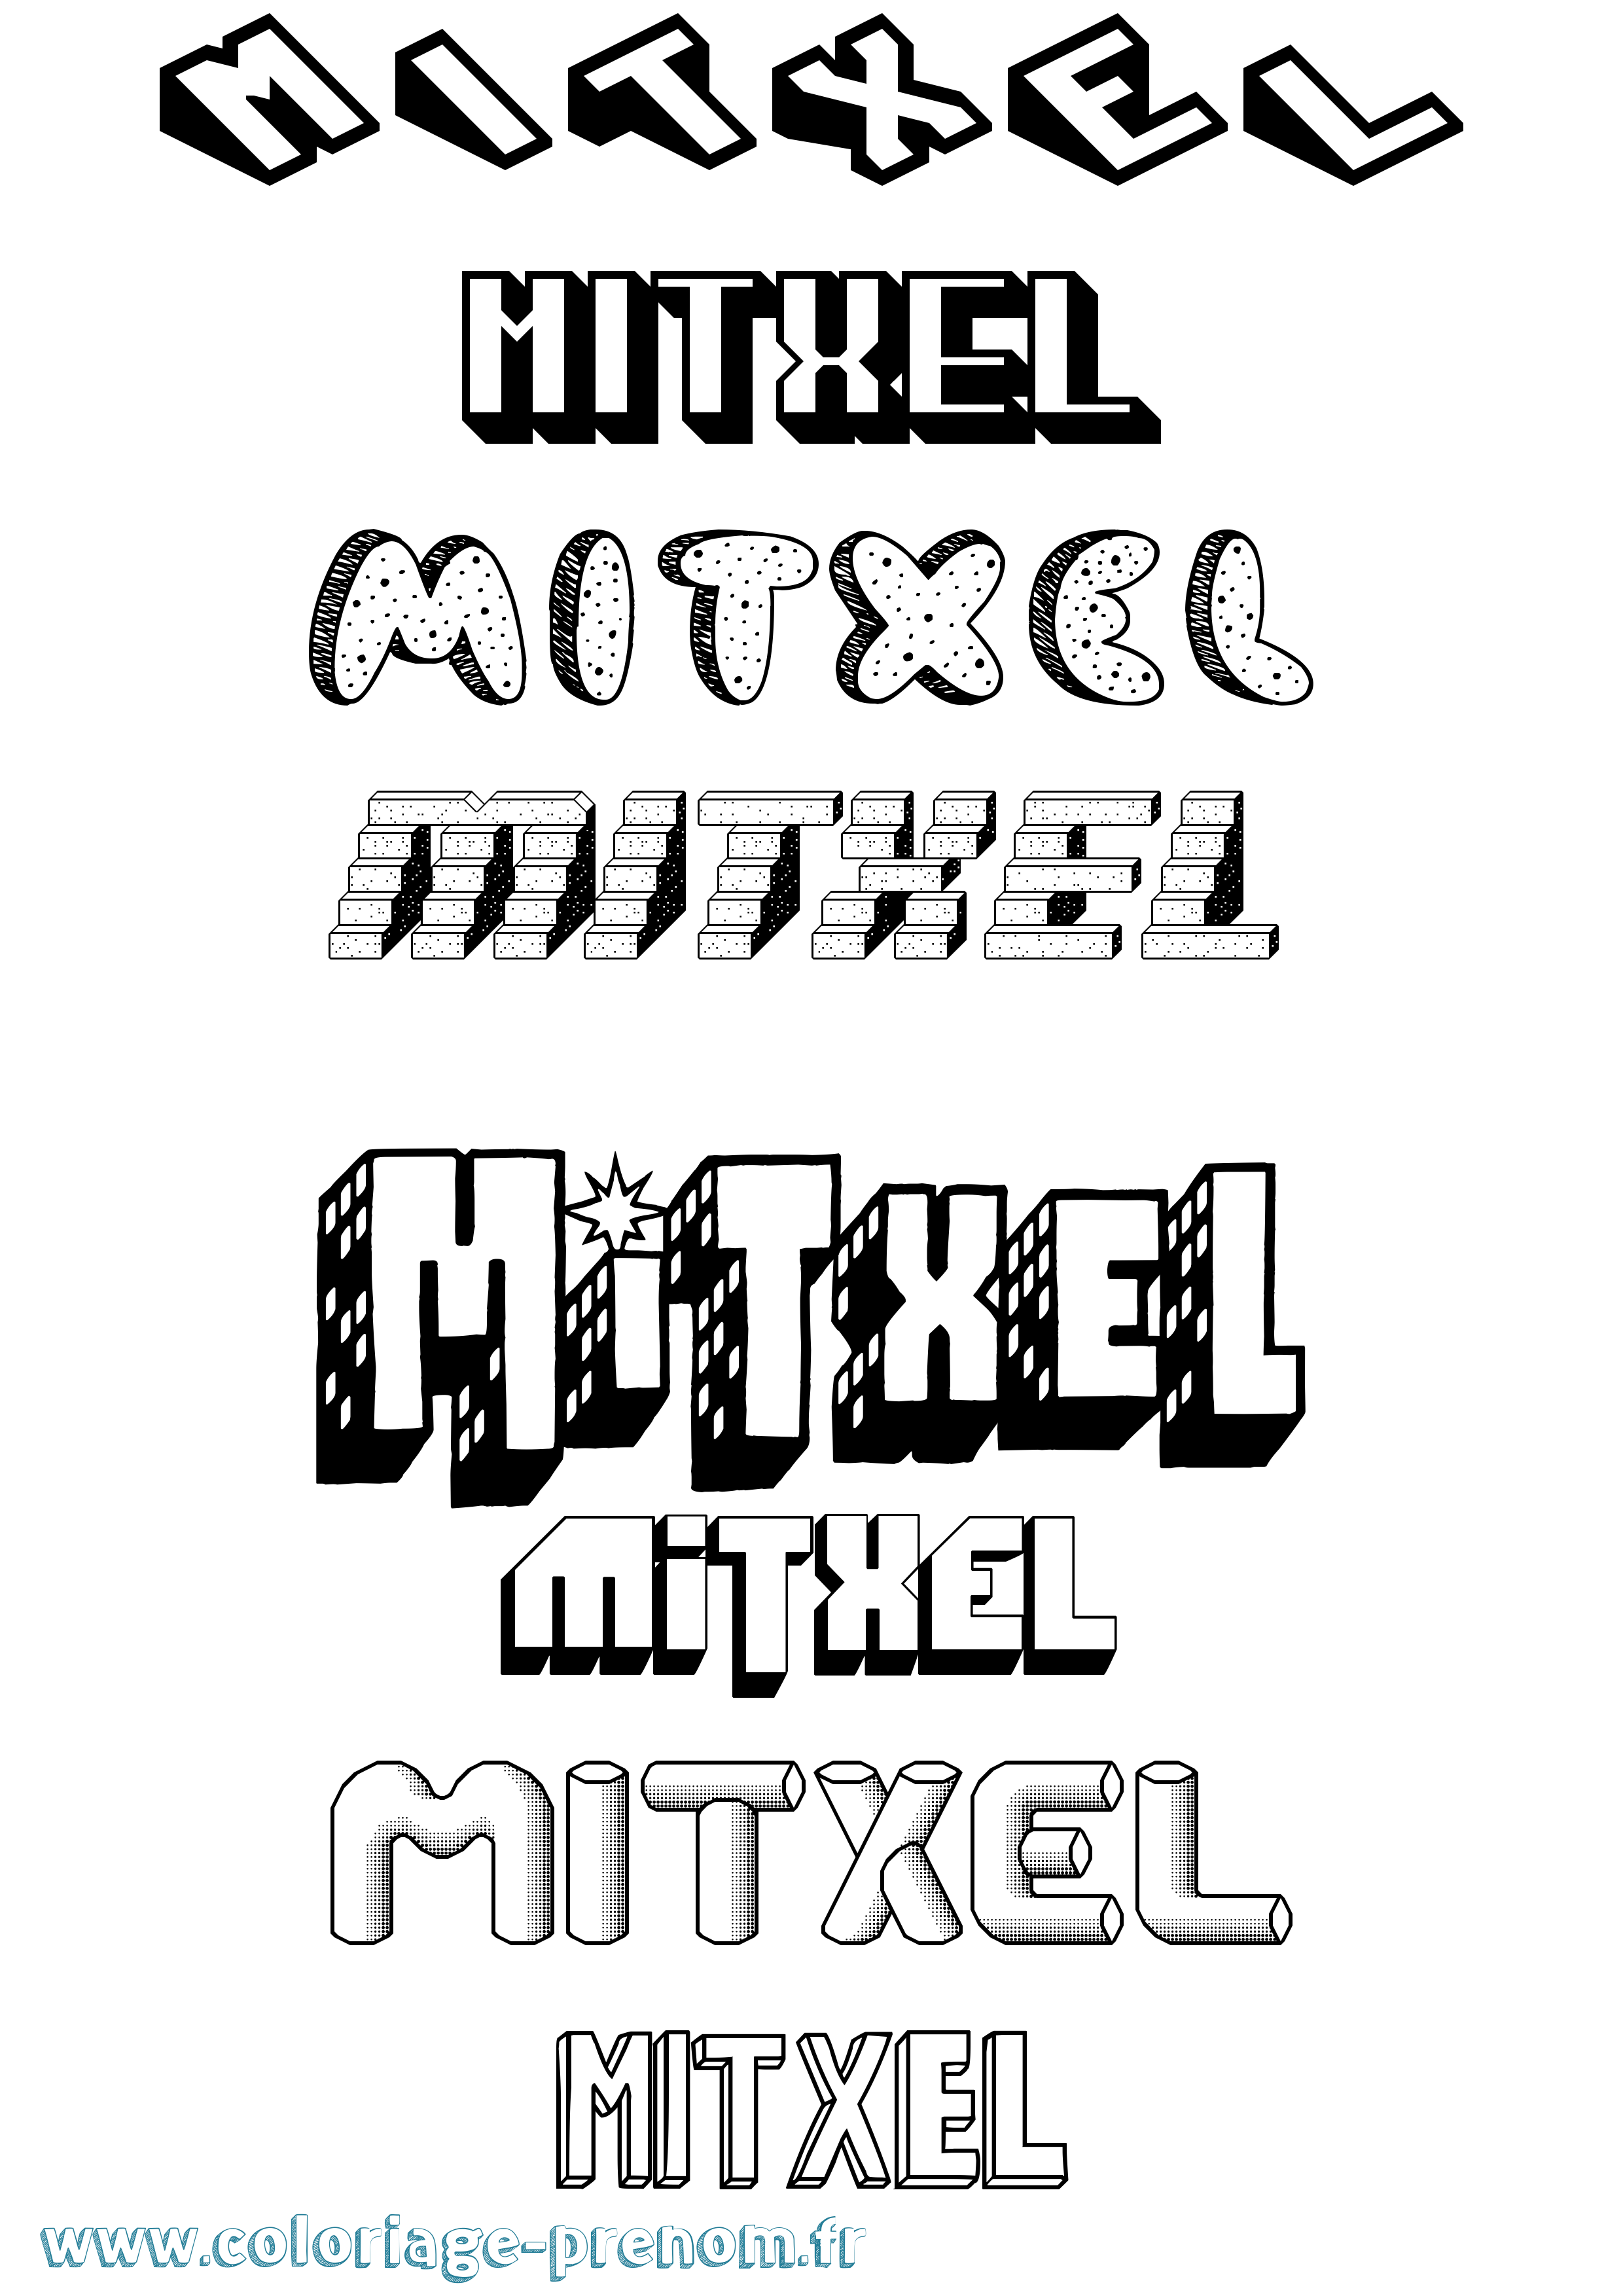 Coloriage prénom Mitxel Effet 3D